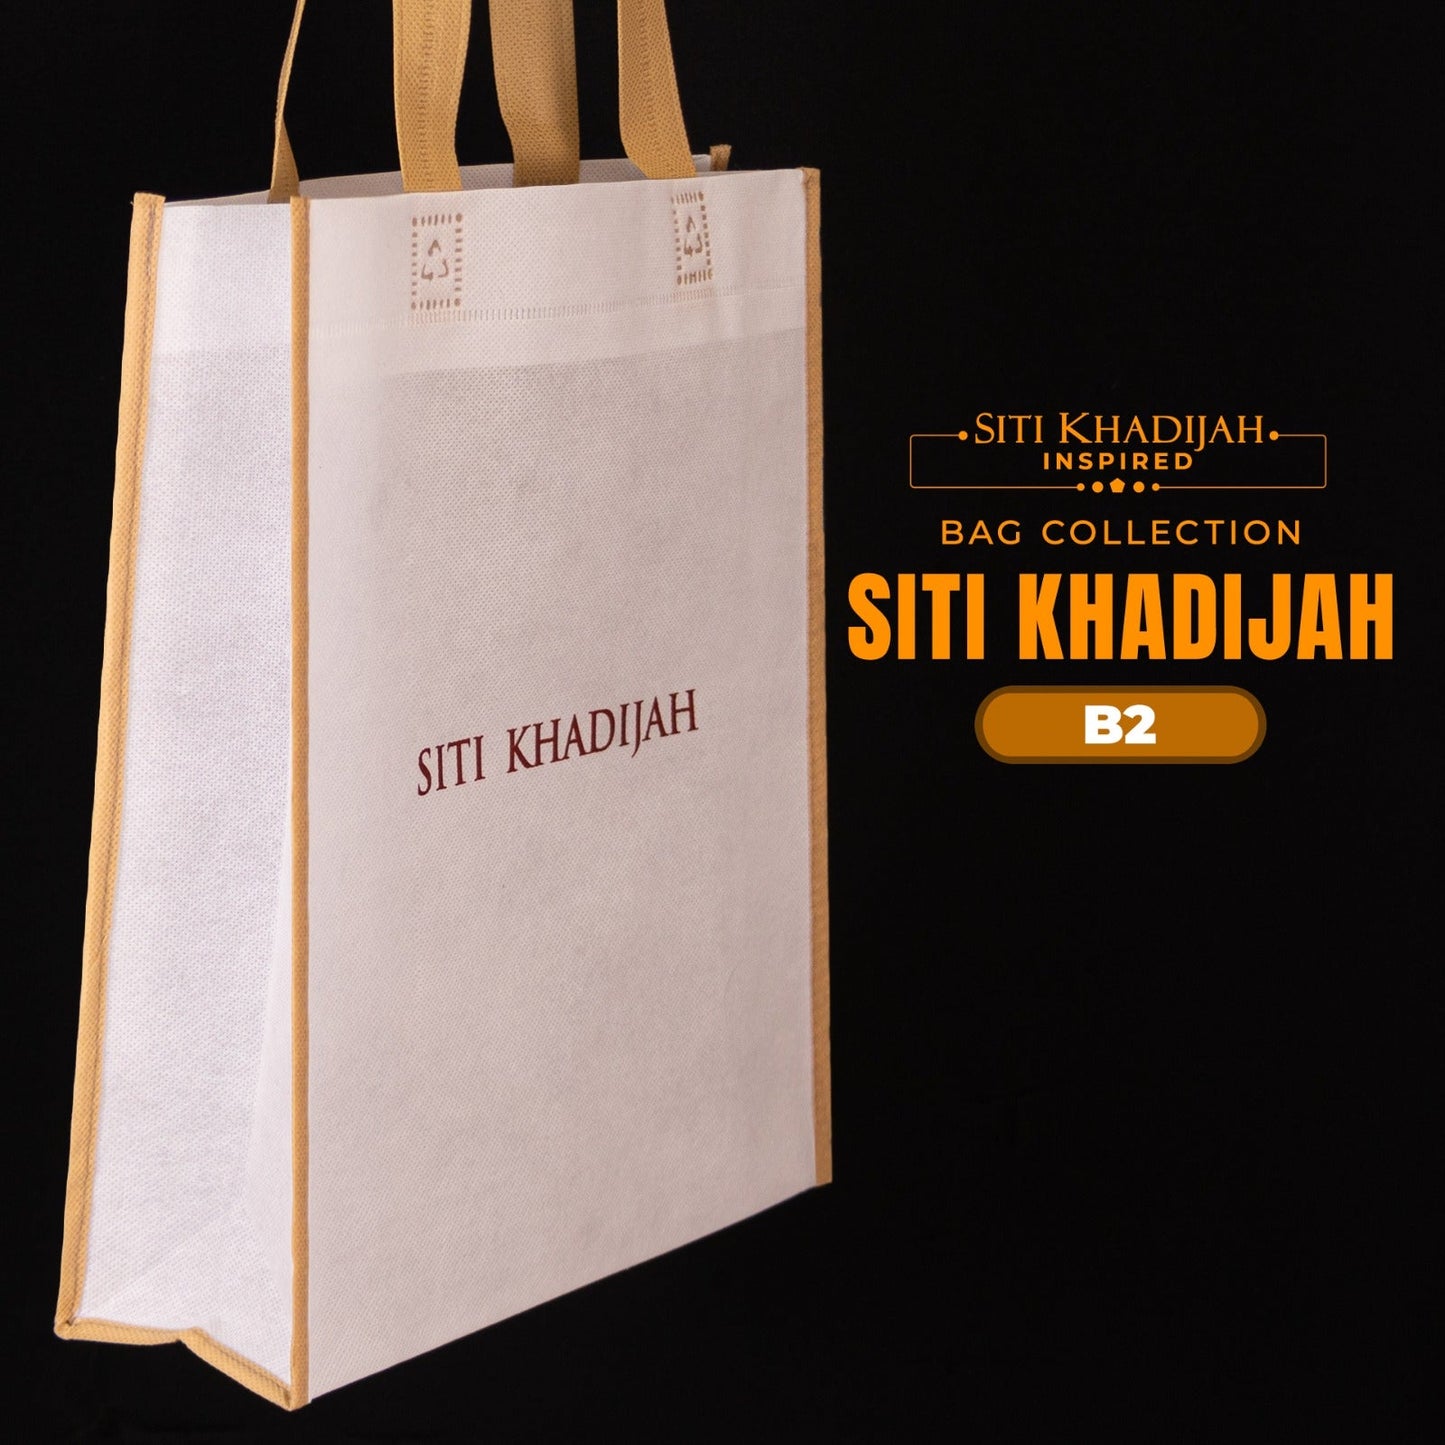 Telekung Siti Khadijah Inspired Modish Akasia Crystal Collection - Free Wovenbag